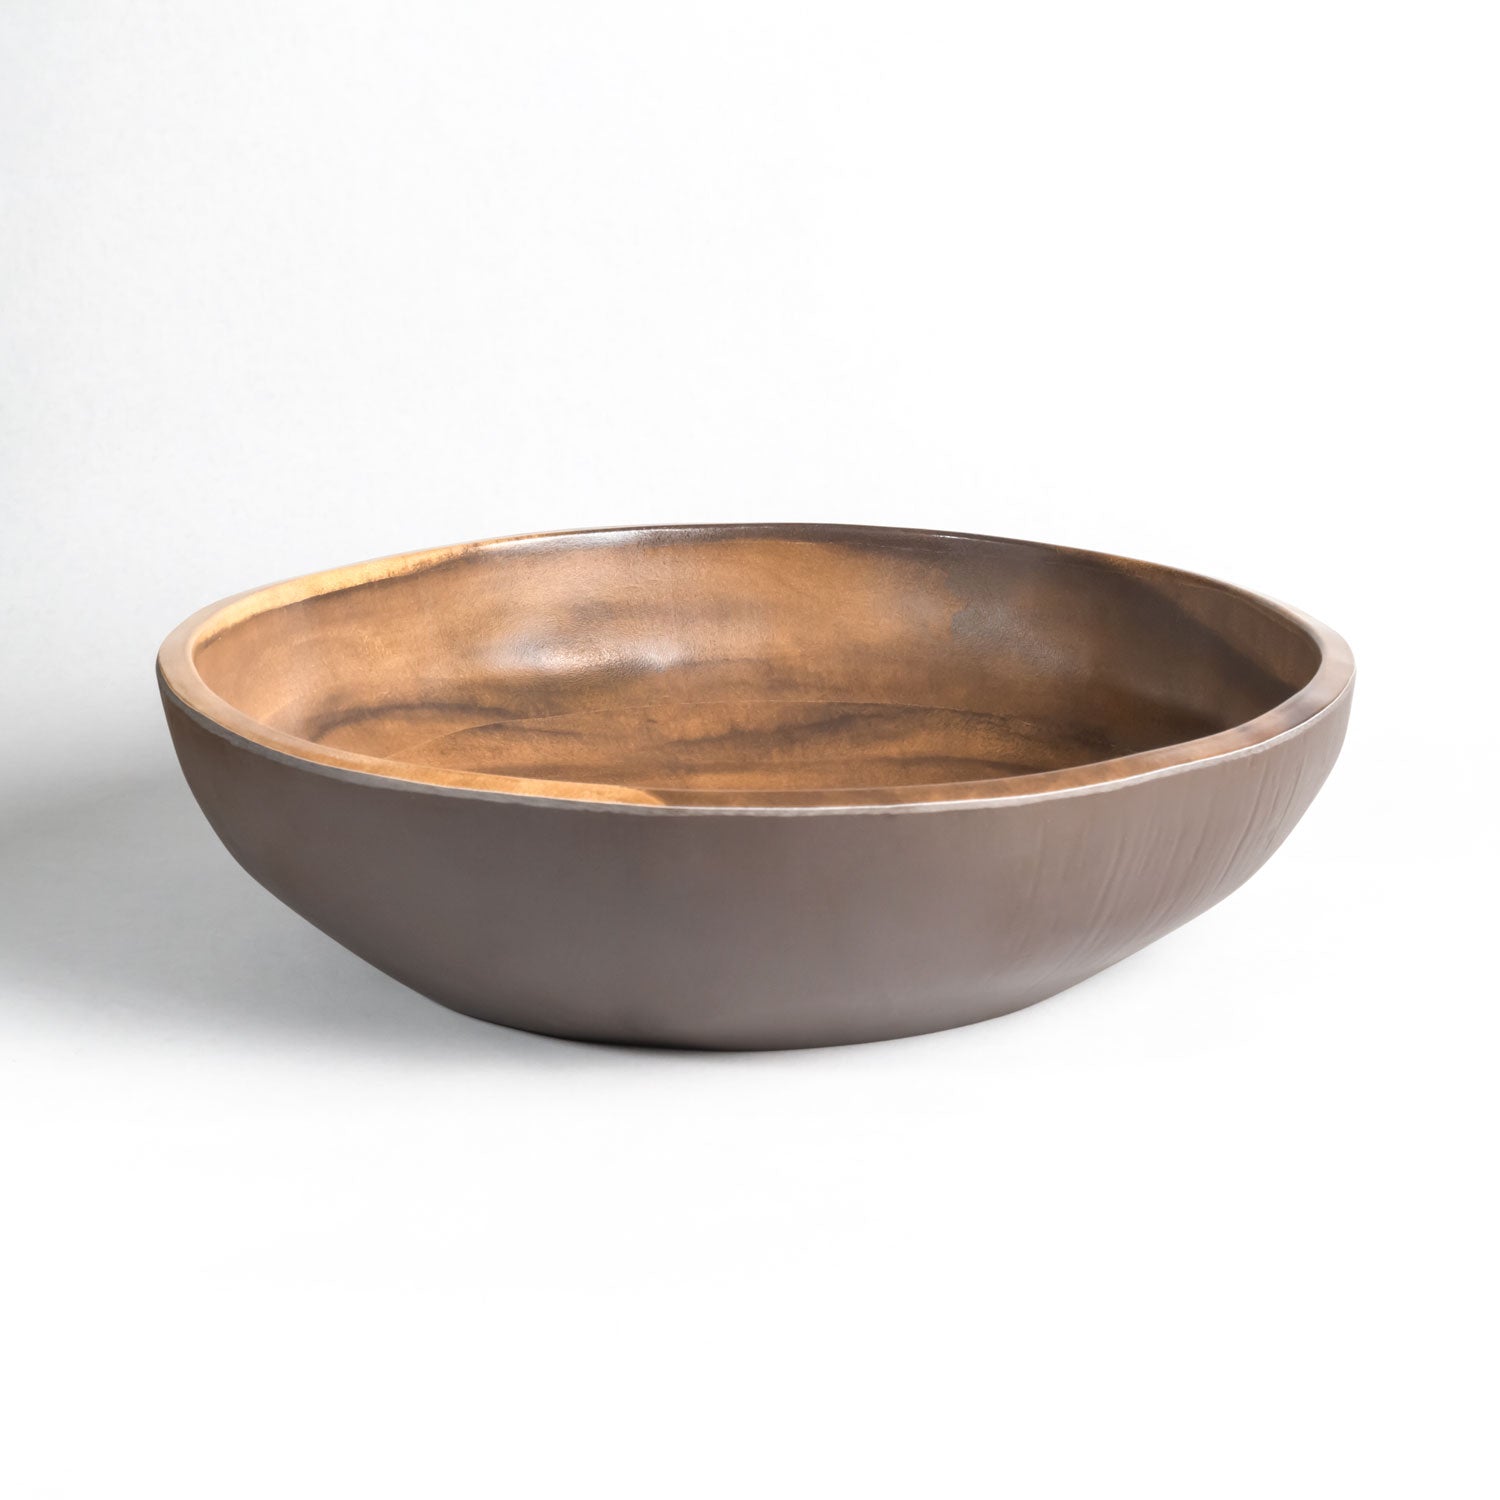 Merritt Designs Sequoia Wood 12.5 inch Melamine Serving Bowl